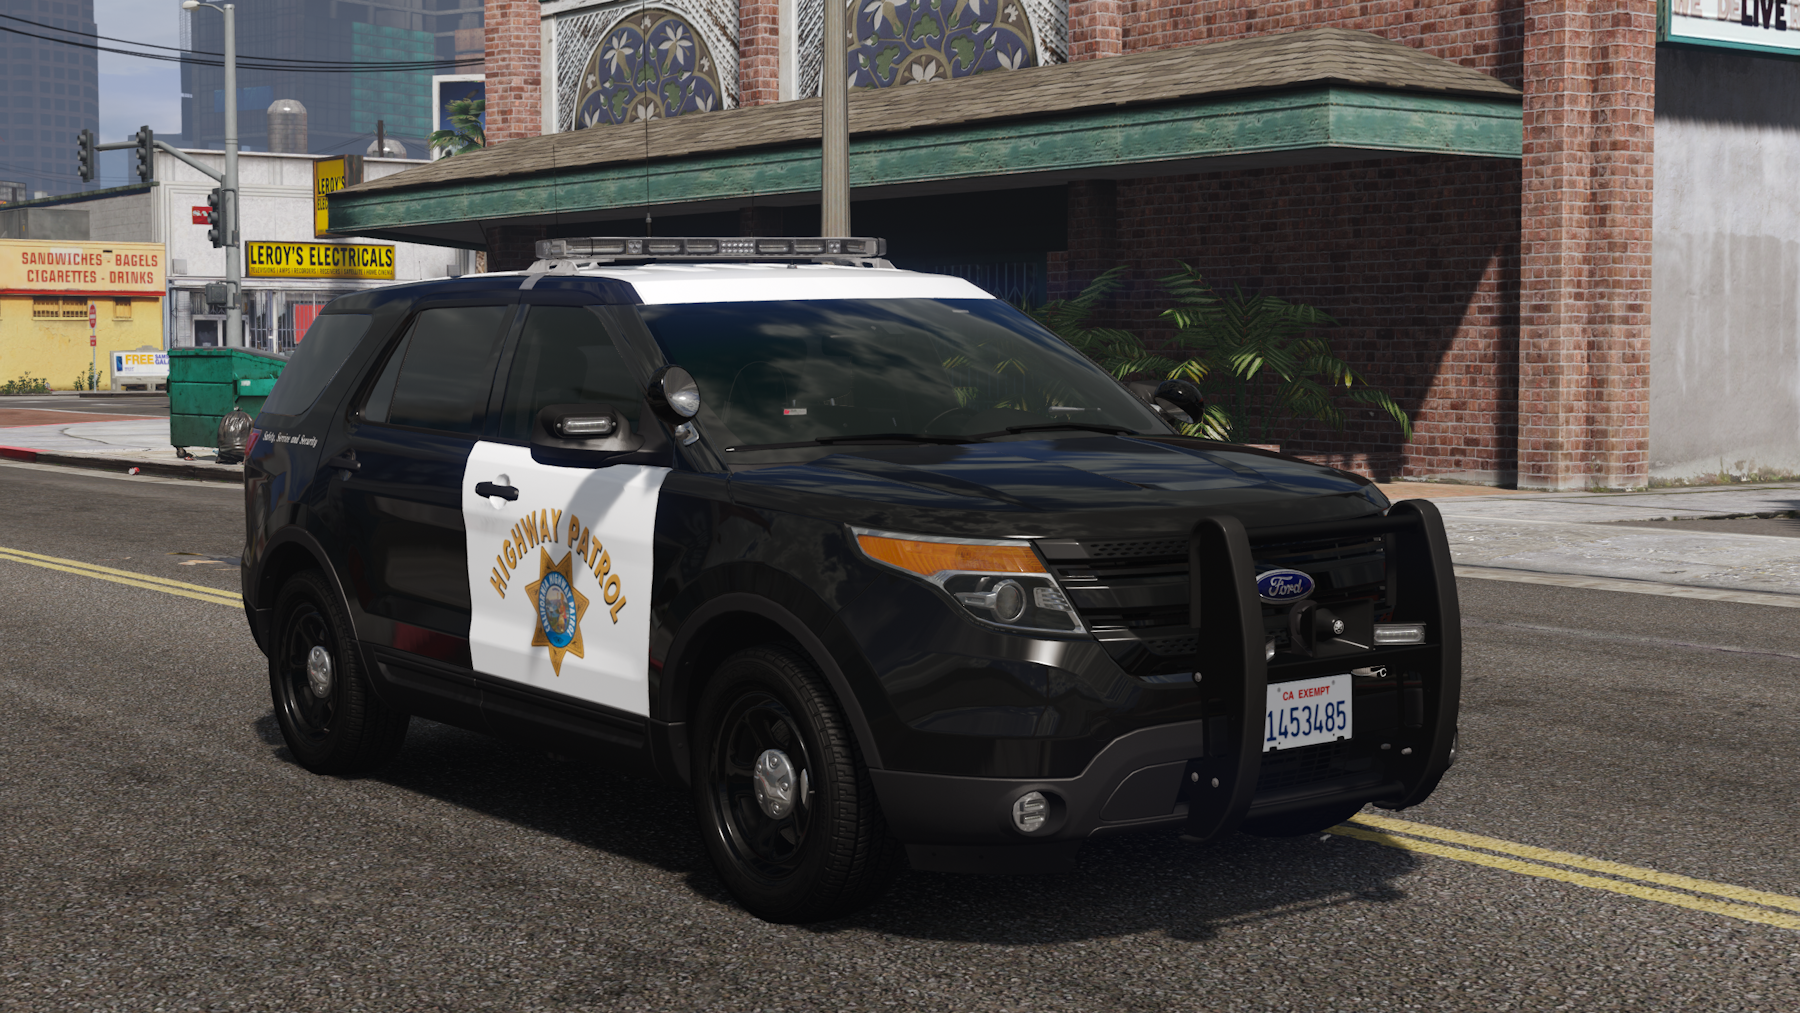 California Highway Patrol 2013-15 FPIU - Modding Forum